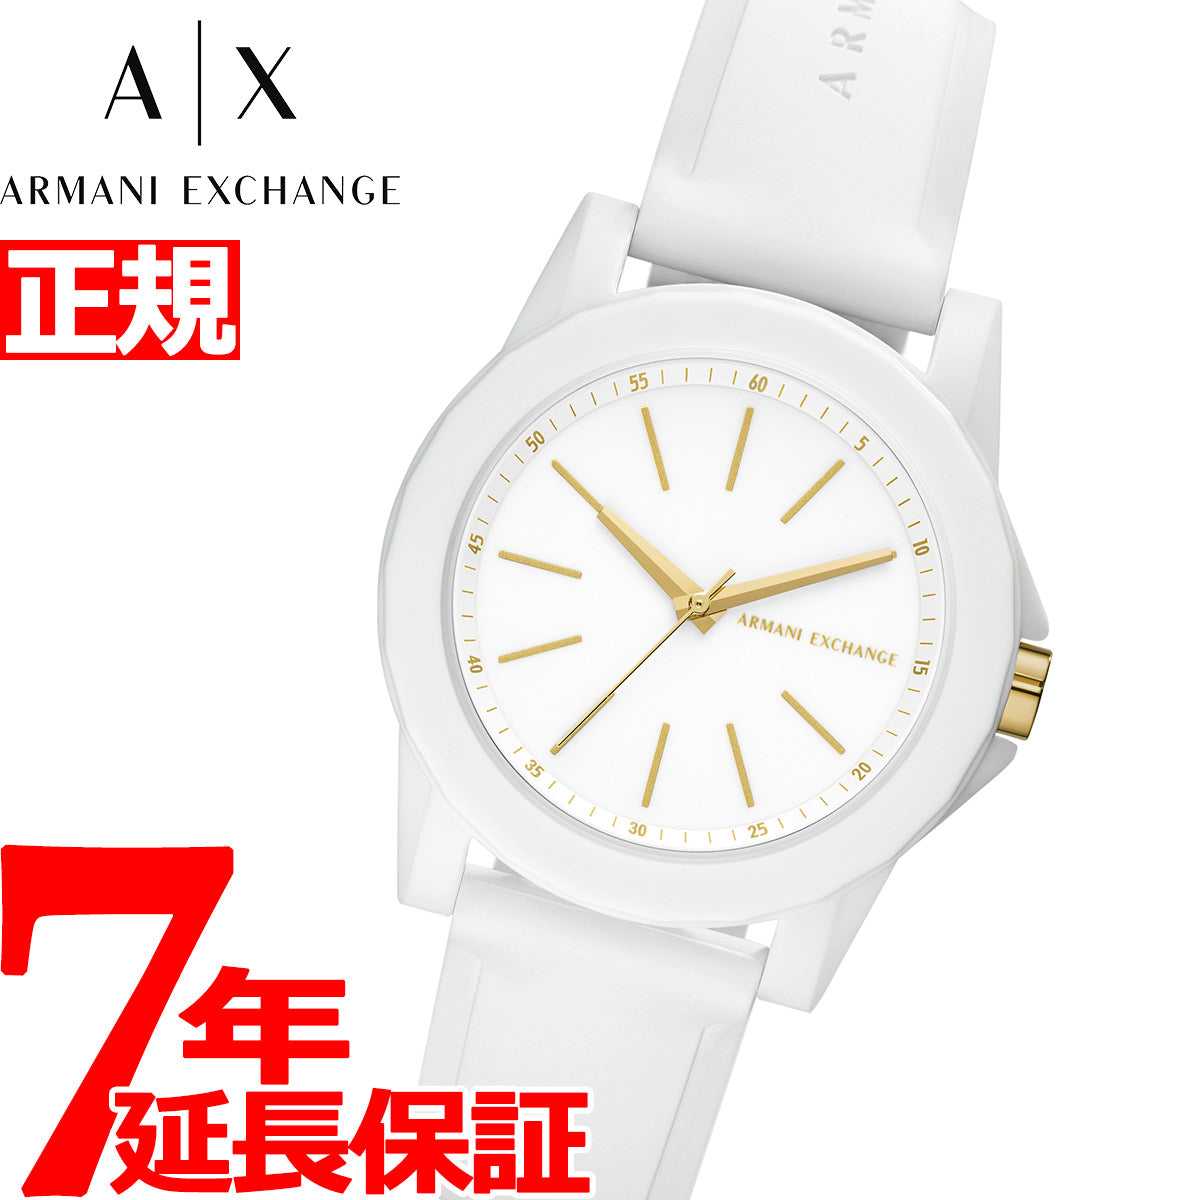 A|X アルマーニ エクスチェンジ ARMANI EXCHANGE 腕時計 レディース